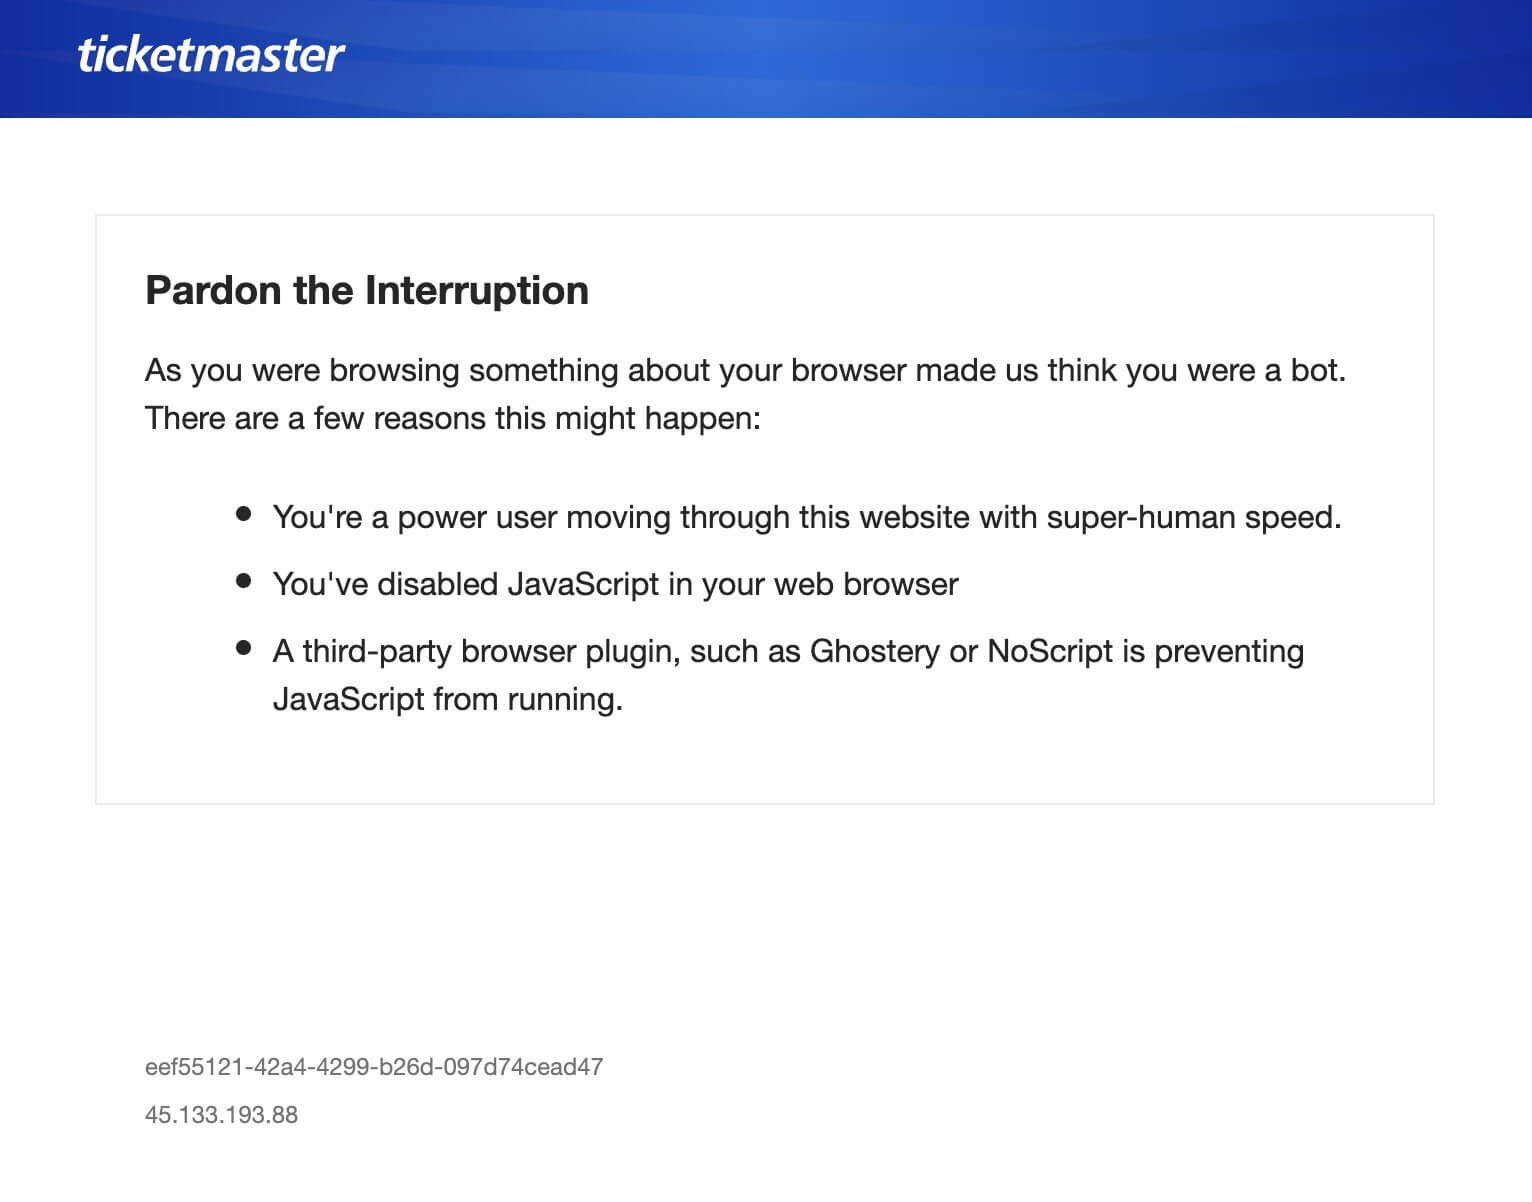 Pardon the interruption ticketmaster error message